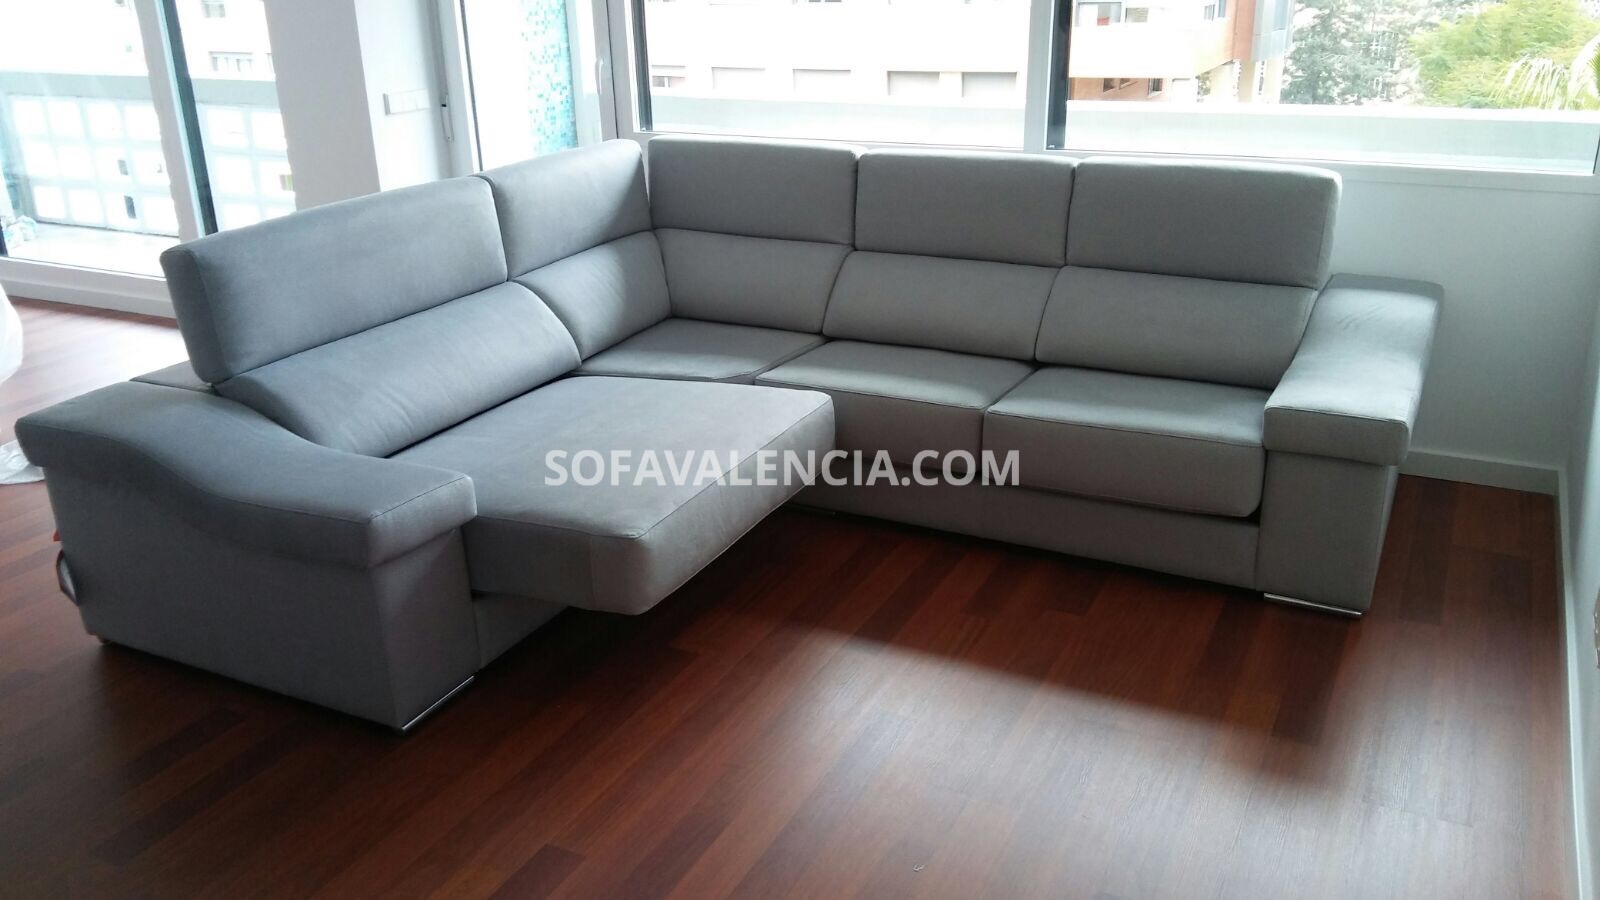 sofa-valencia-fotos-clientes-90